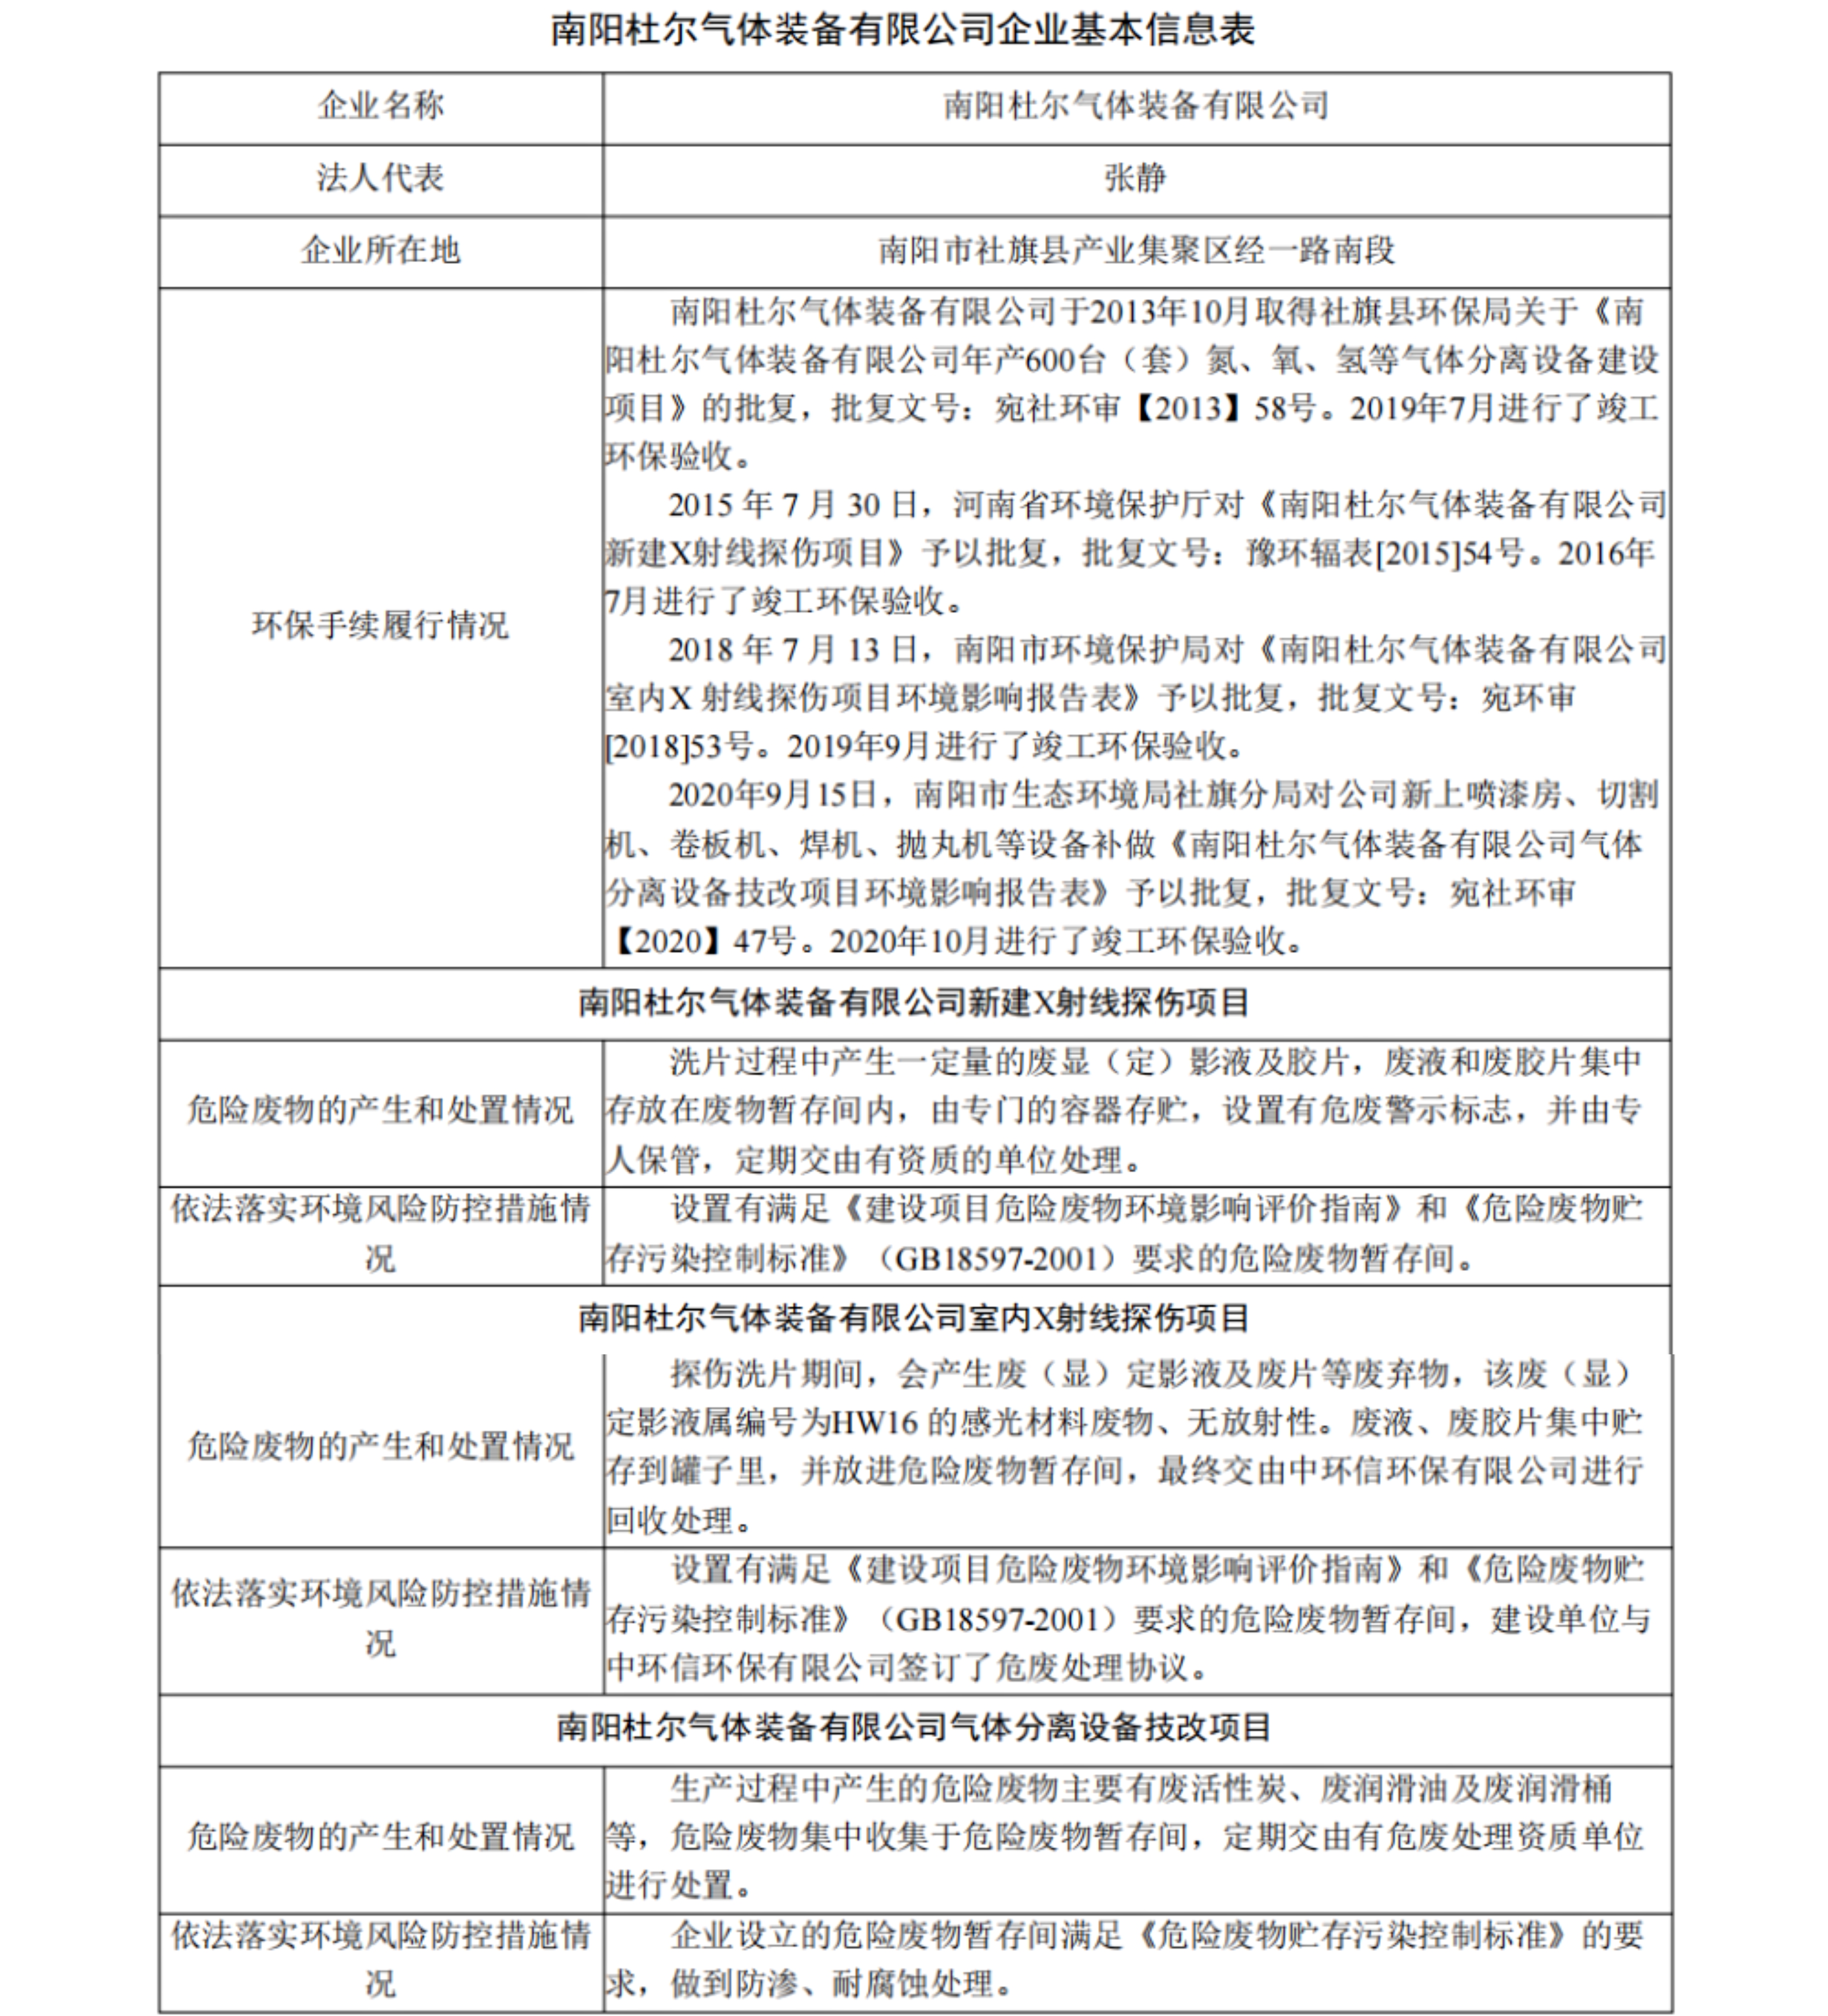 Public announcement of basic information of Nanyang Dur Gas Equipment Co., Ltd.